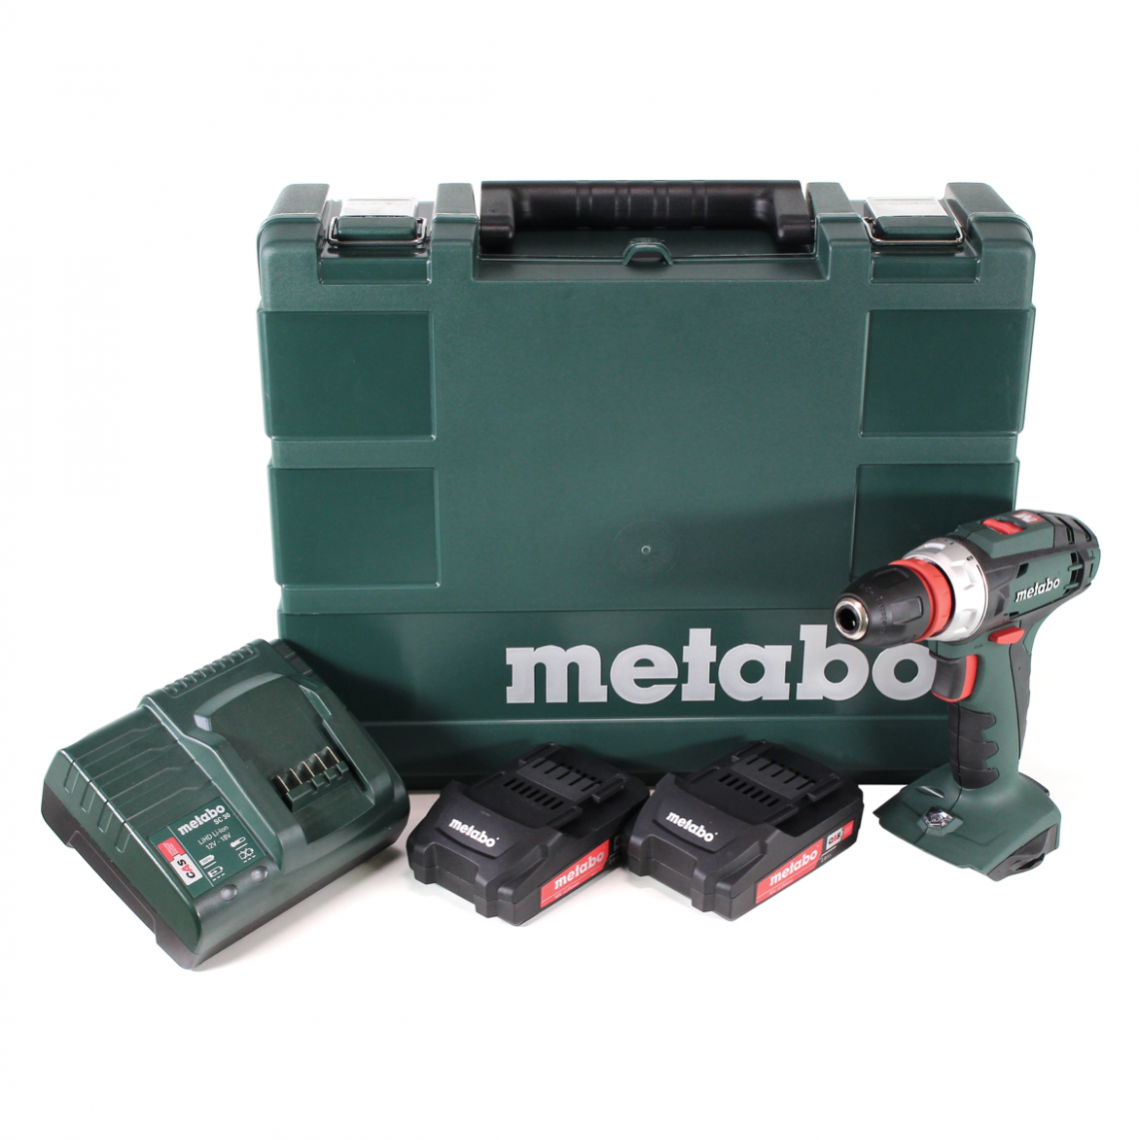 Metabo - Metabo BS 18 Quick Perceuse-visseuse sans fil 18V 48Nm + 2x Batteries 2,0Ah + Chargeur + Coffret de transport ( 602217950 ) - Perceuses, visseuses sans fil